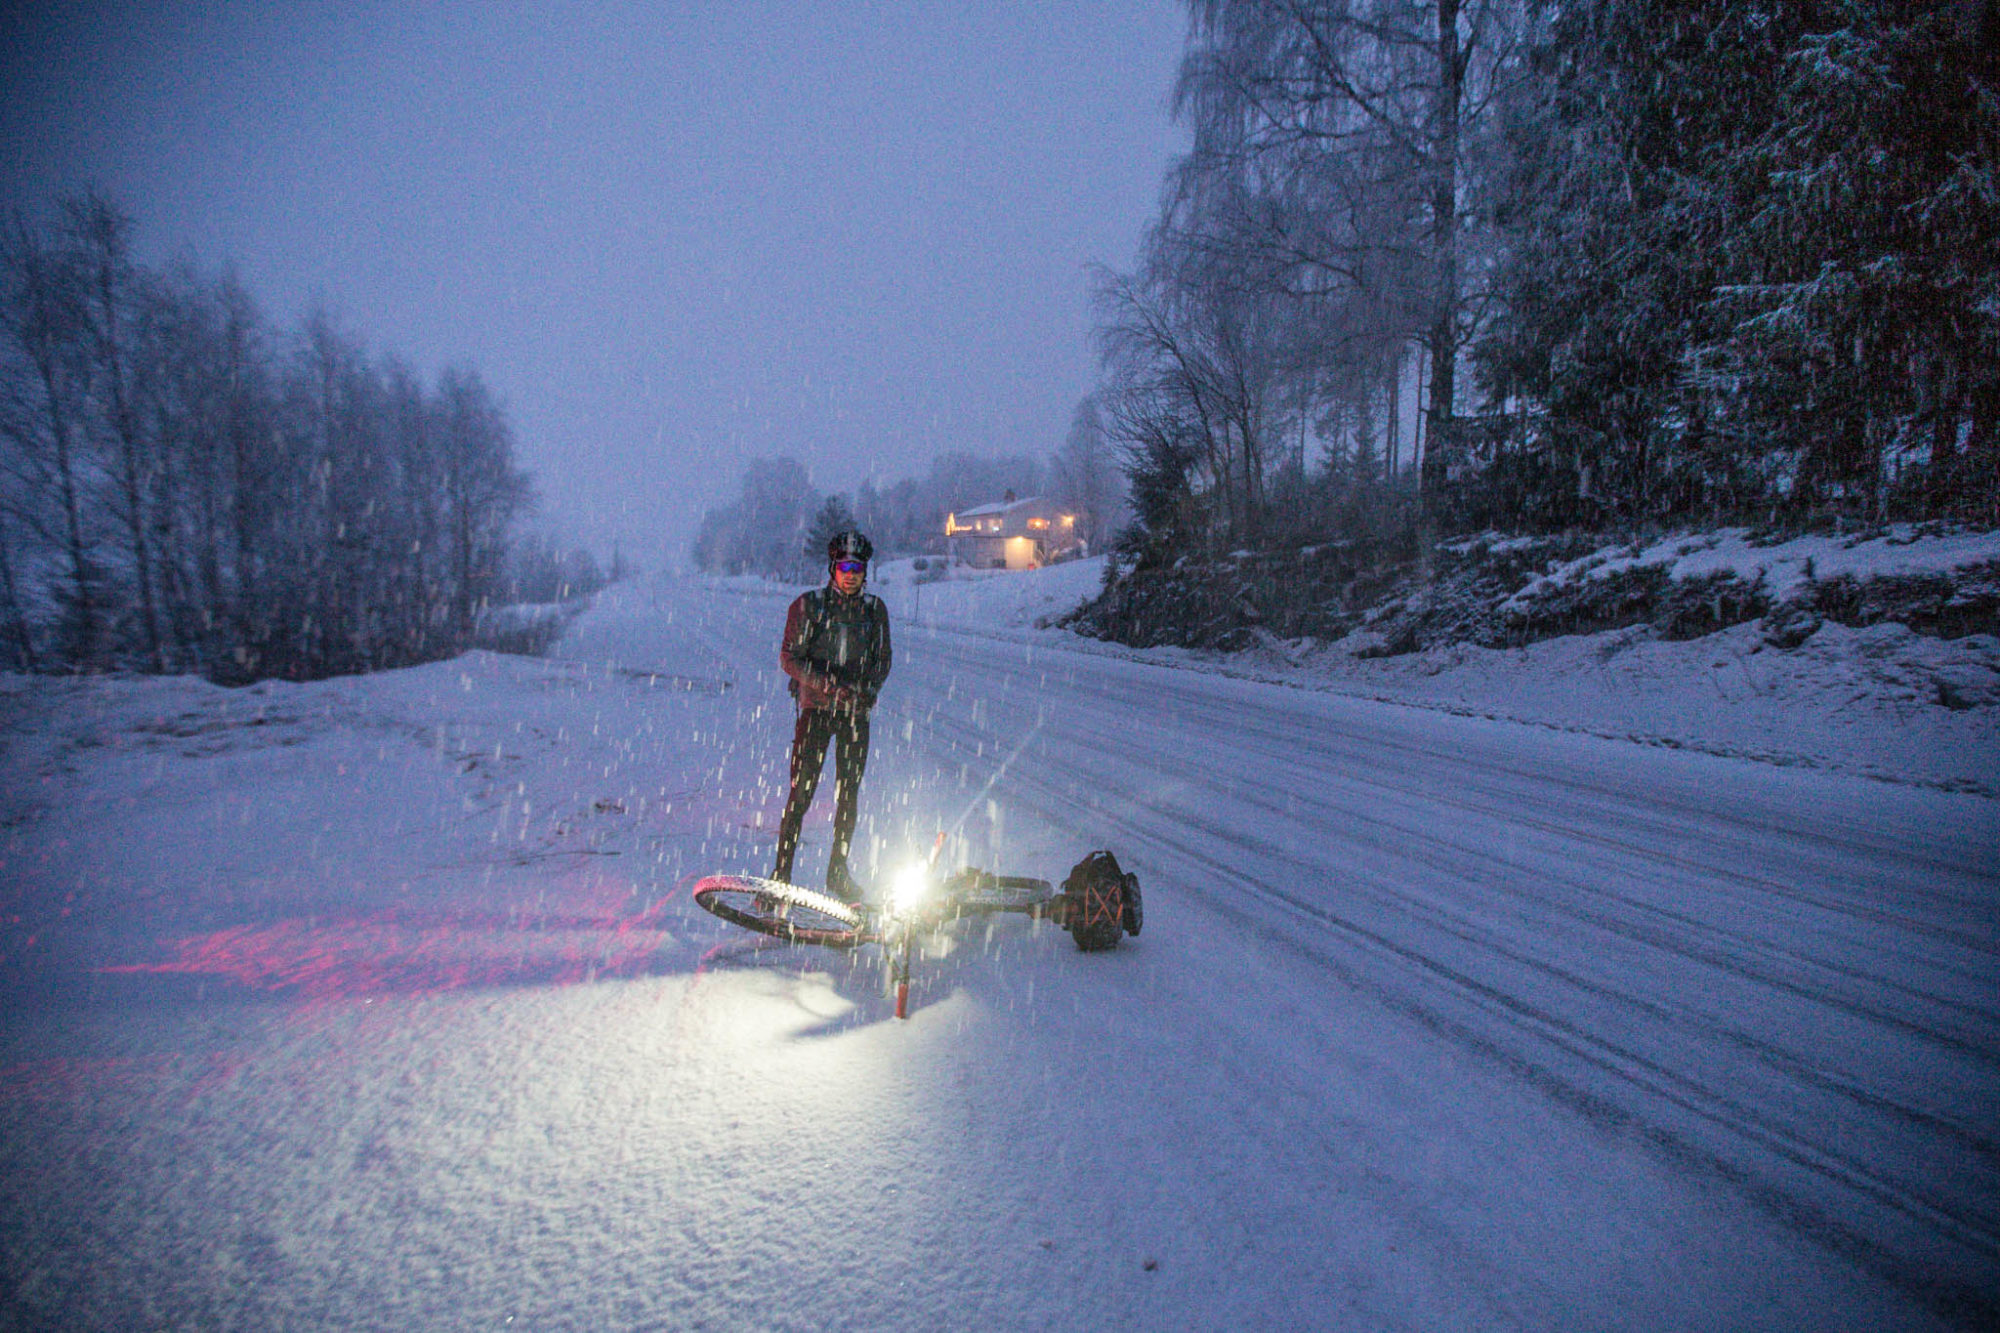 Tim Wiggins, Bikepacking Norway, Winter Bikepacking